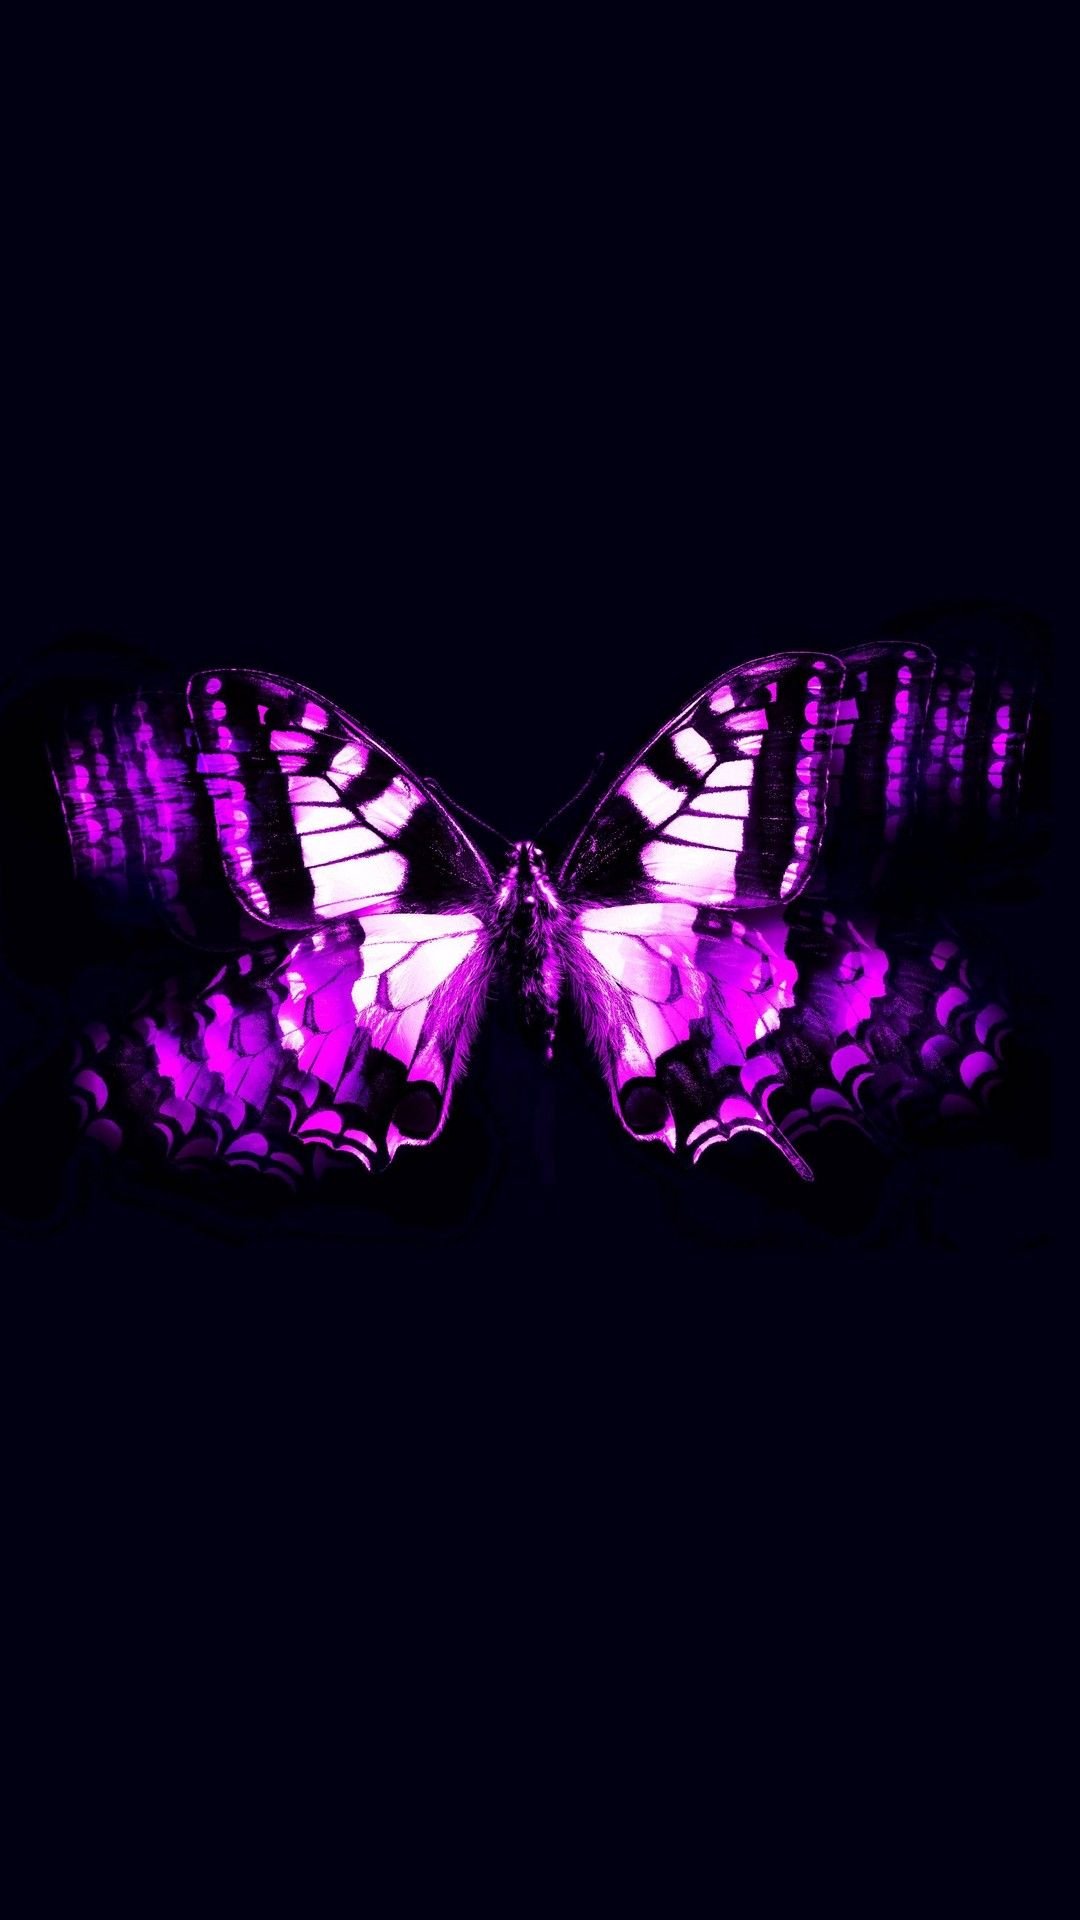 A purple butterfly on a black background - Butterfly